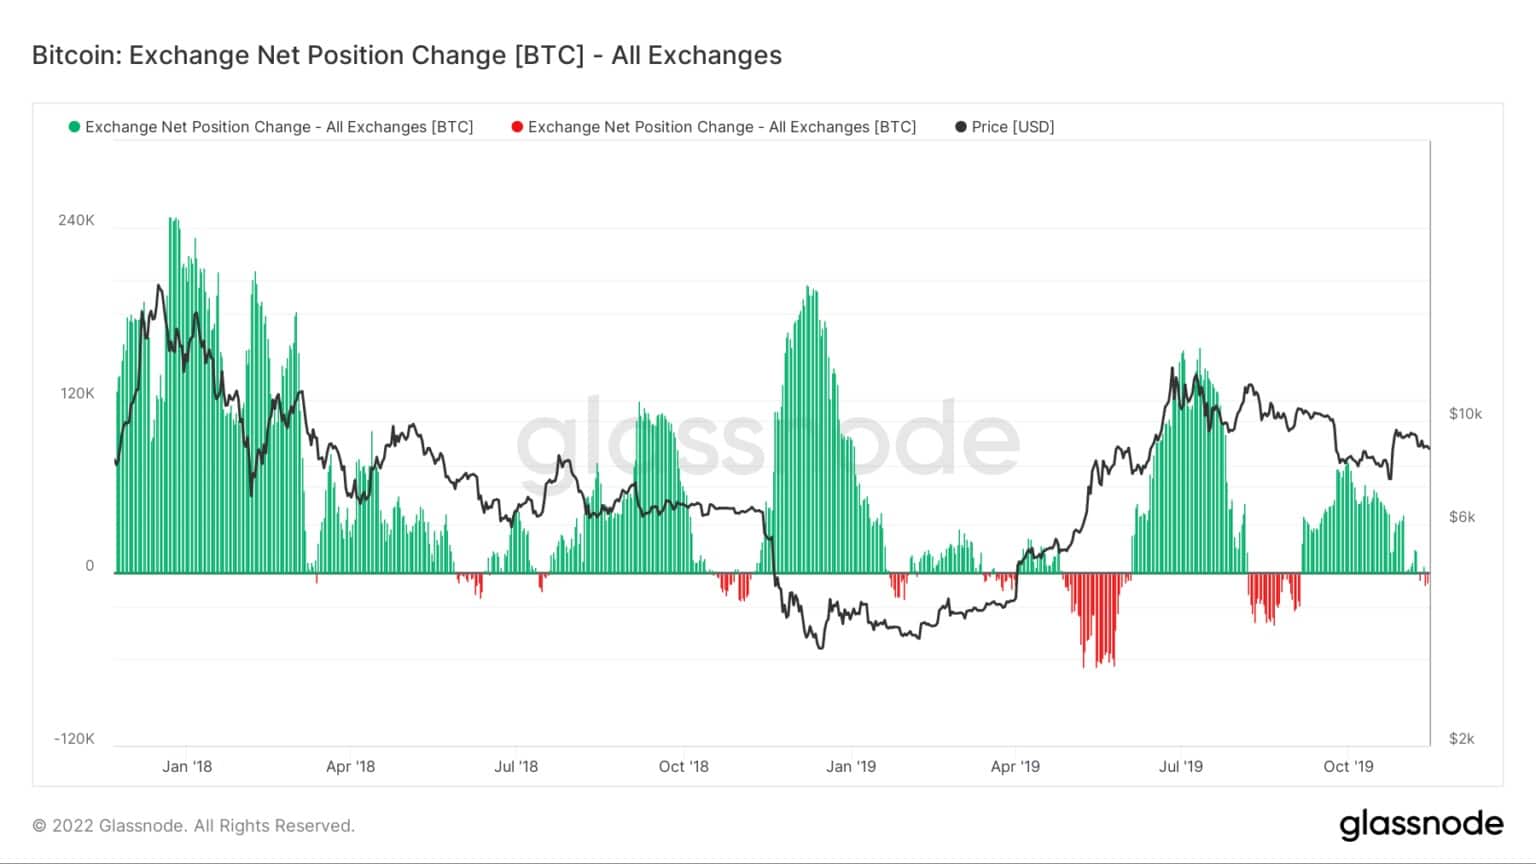 Bitcoin: Exchange Net Position Change - All Exchanges (Source: Glassnode)